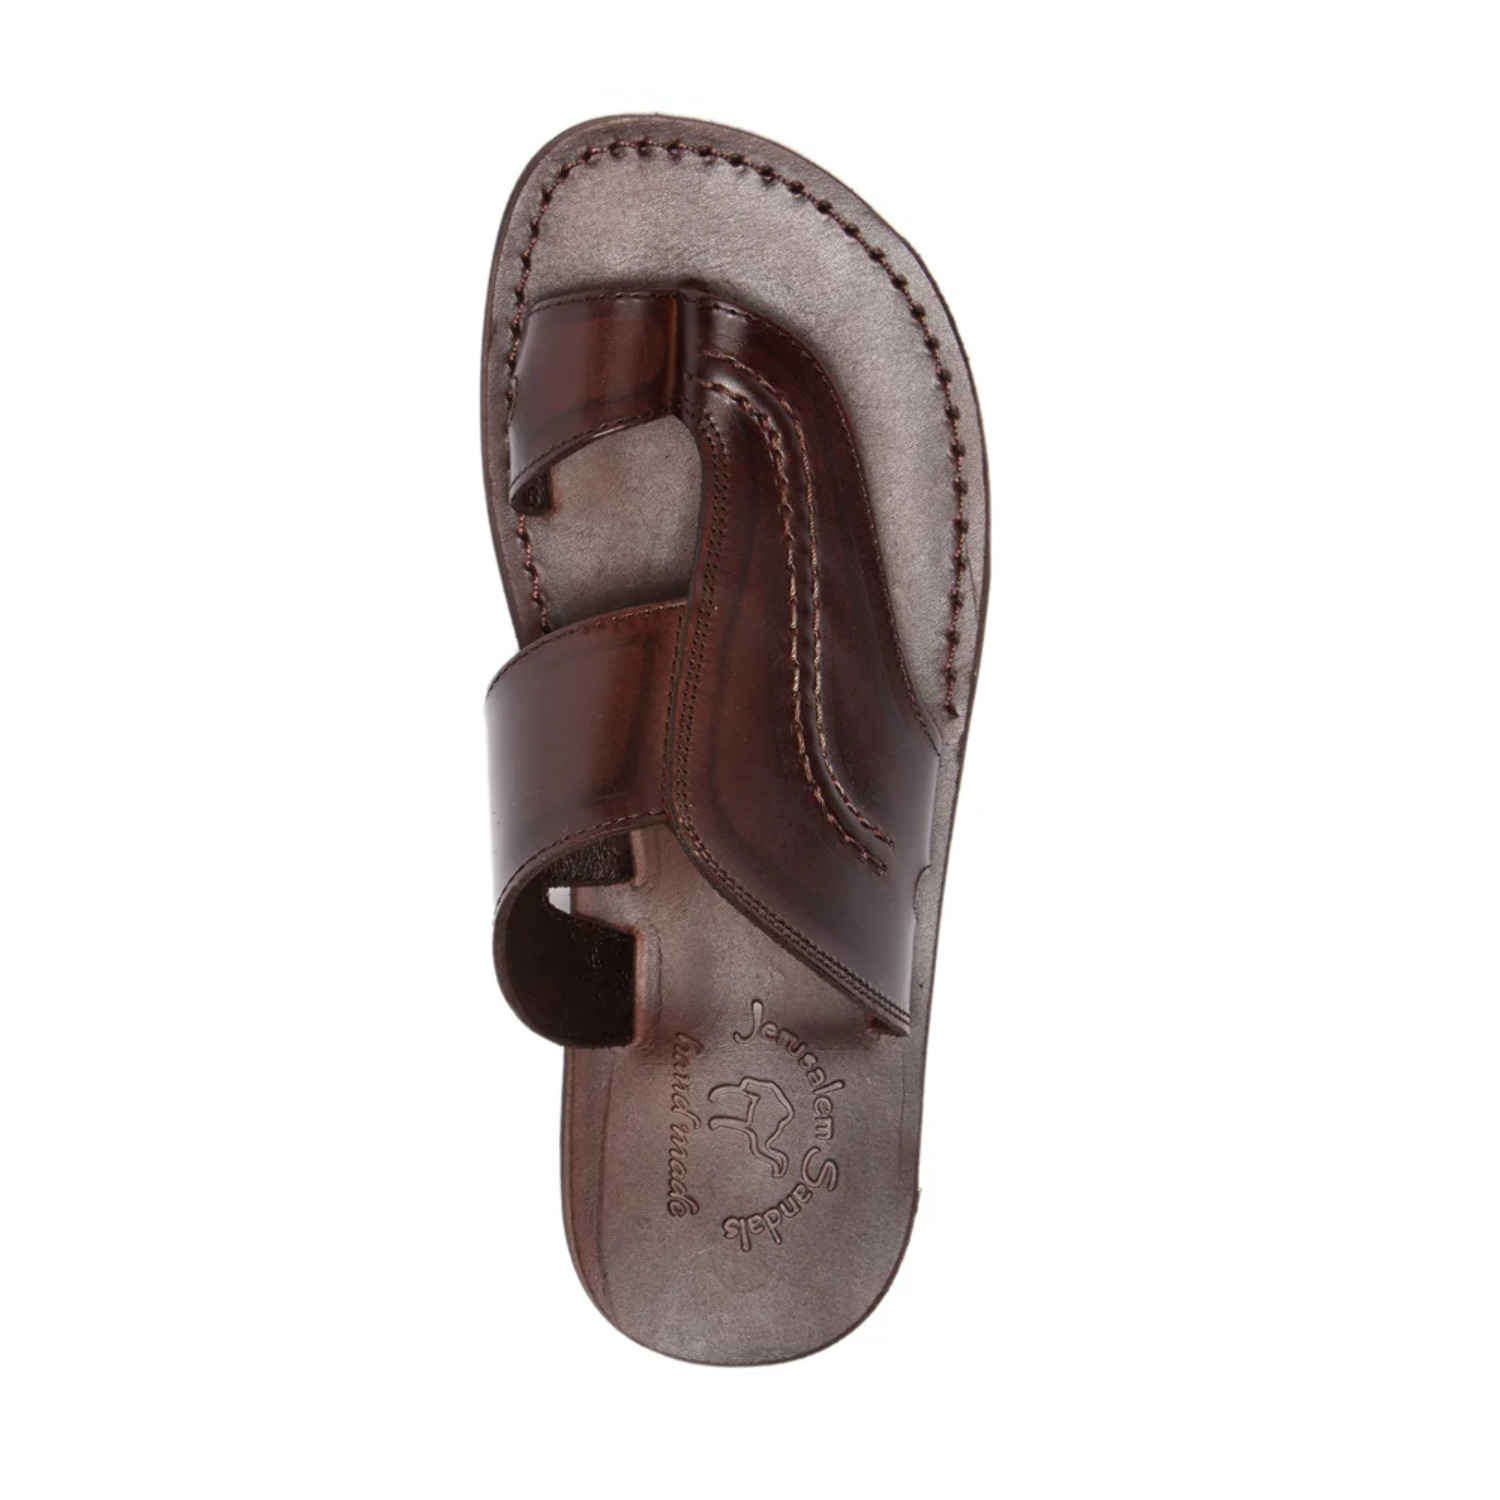 Peter - Leather Toe Strap Sandal - Mens Sandals - image 3 of 8